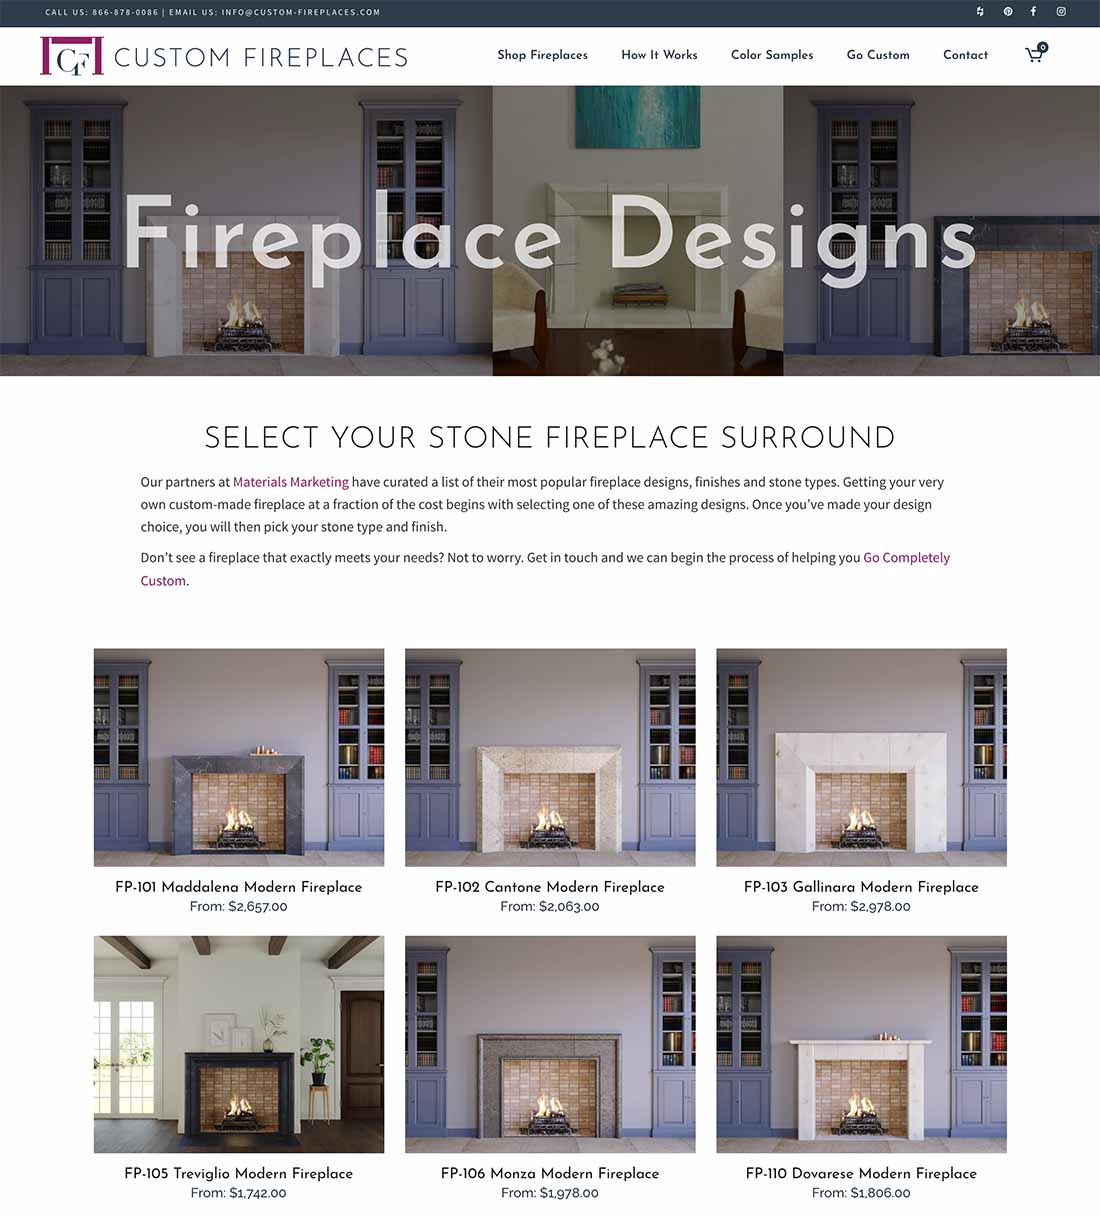 Custom Fireplaces Shop Page